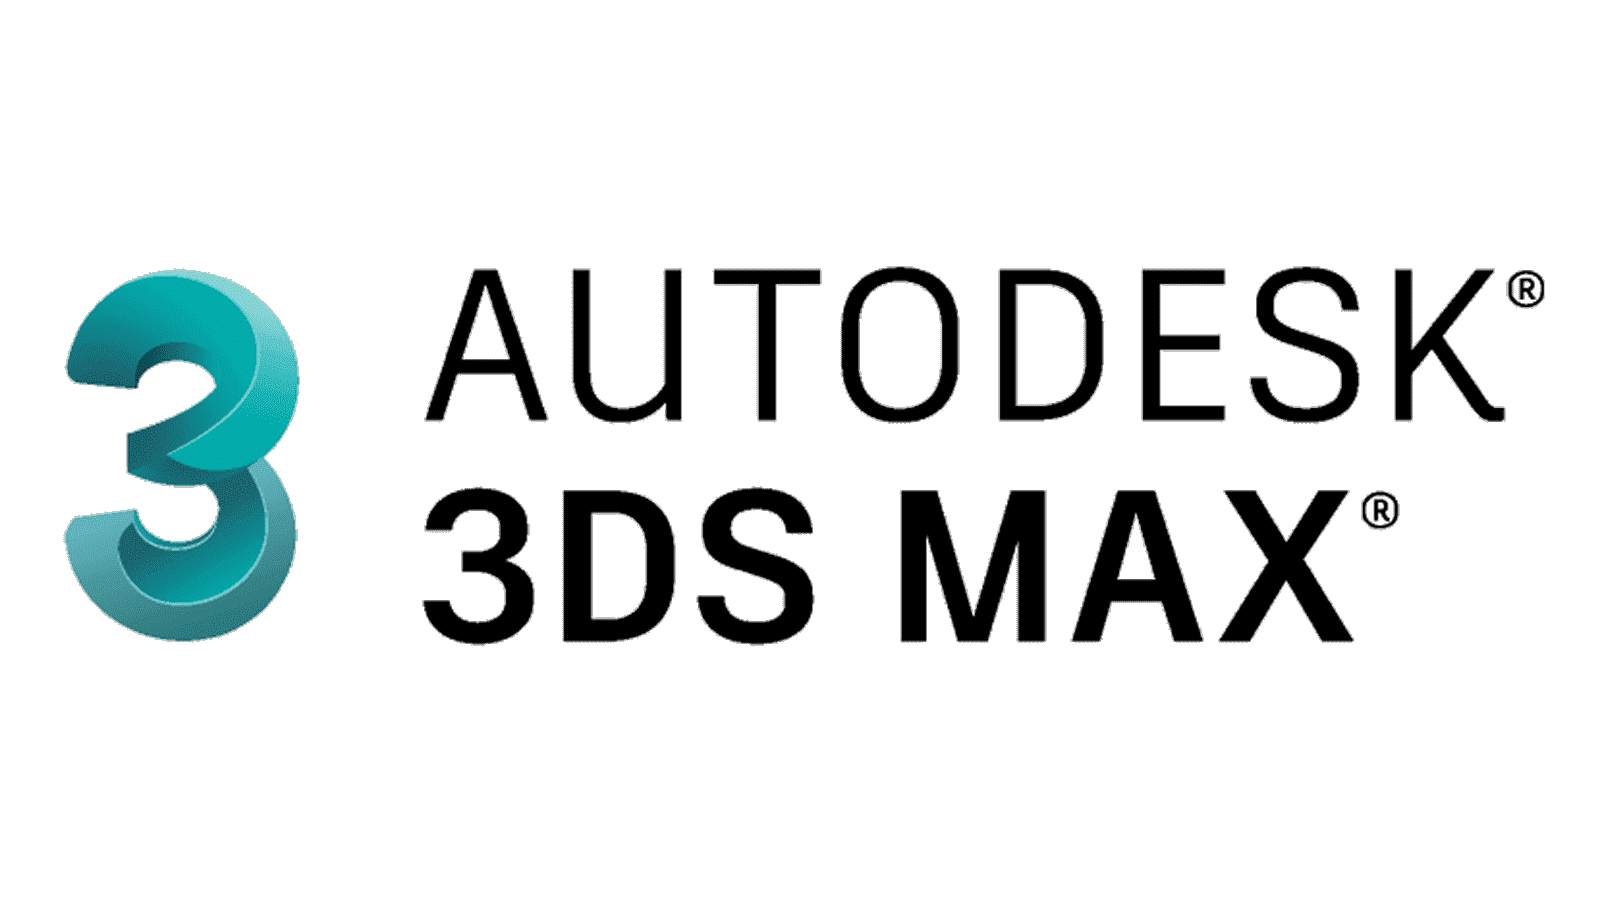 3DsMax logo